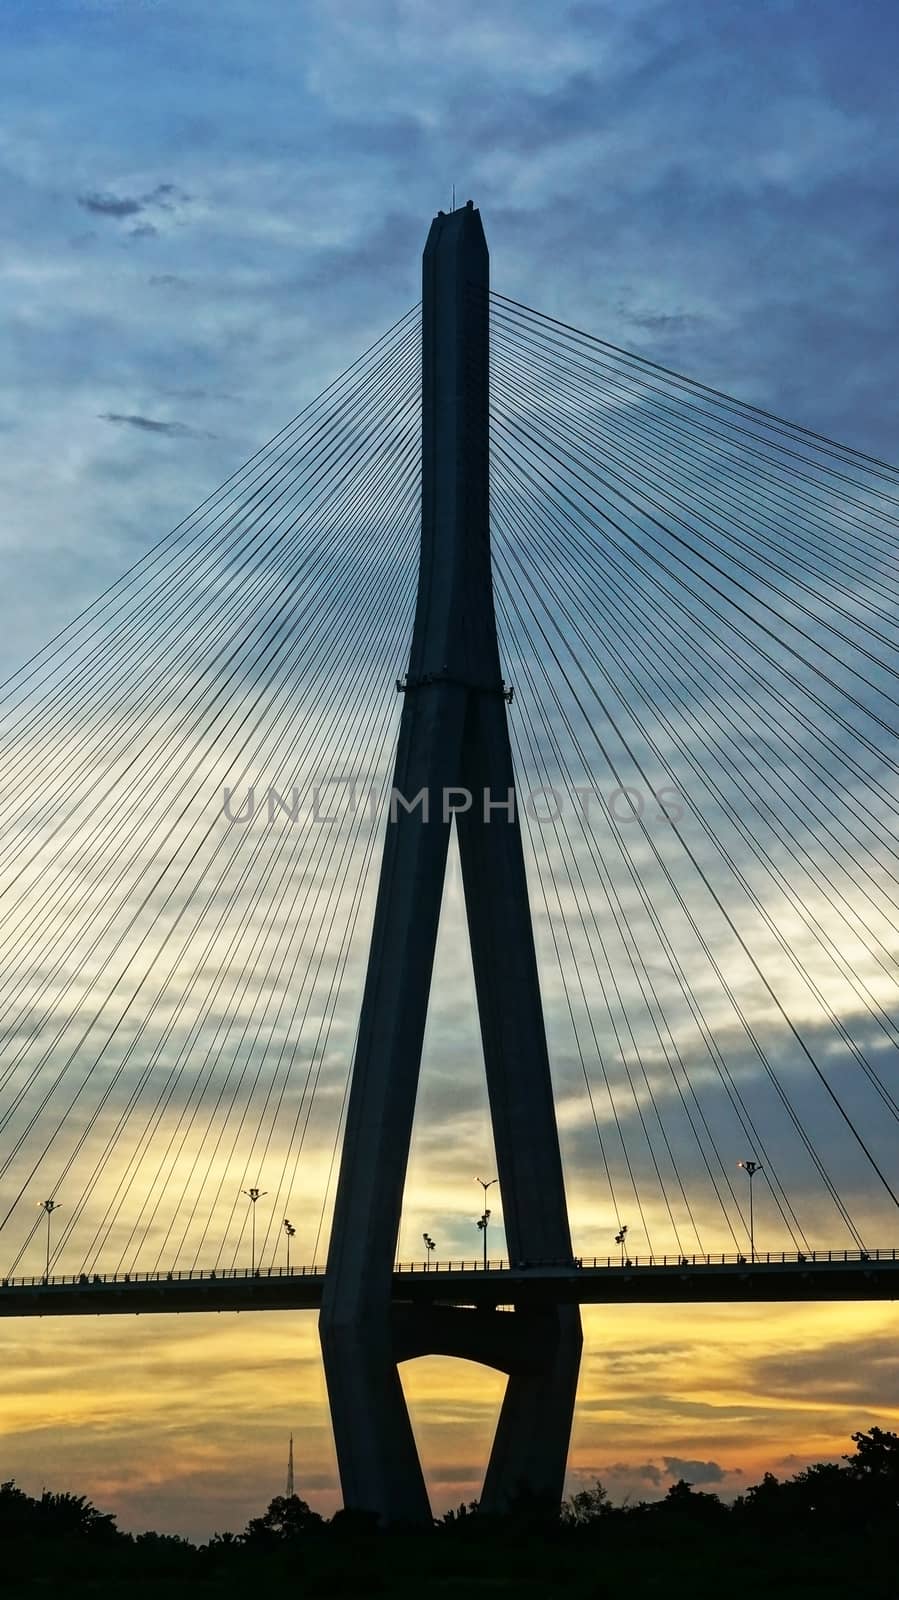 Can Tho Bridge at sunset